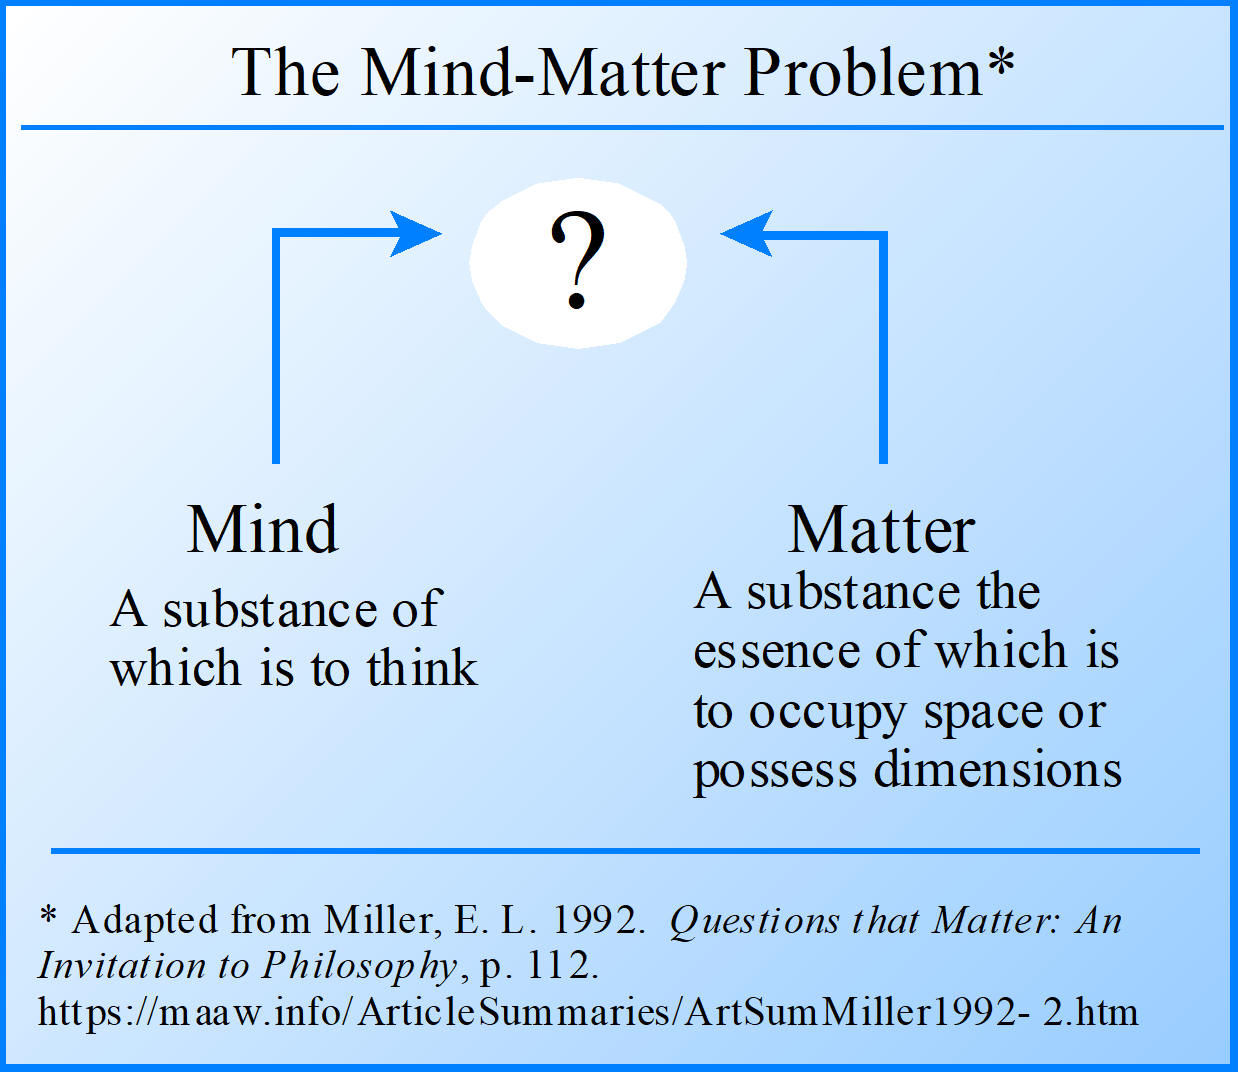 The Mind-Matter Problem